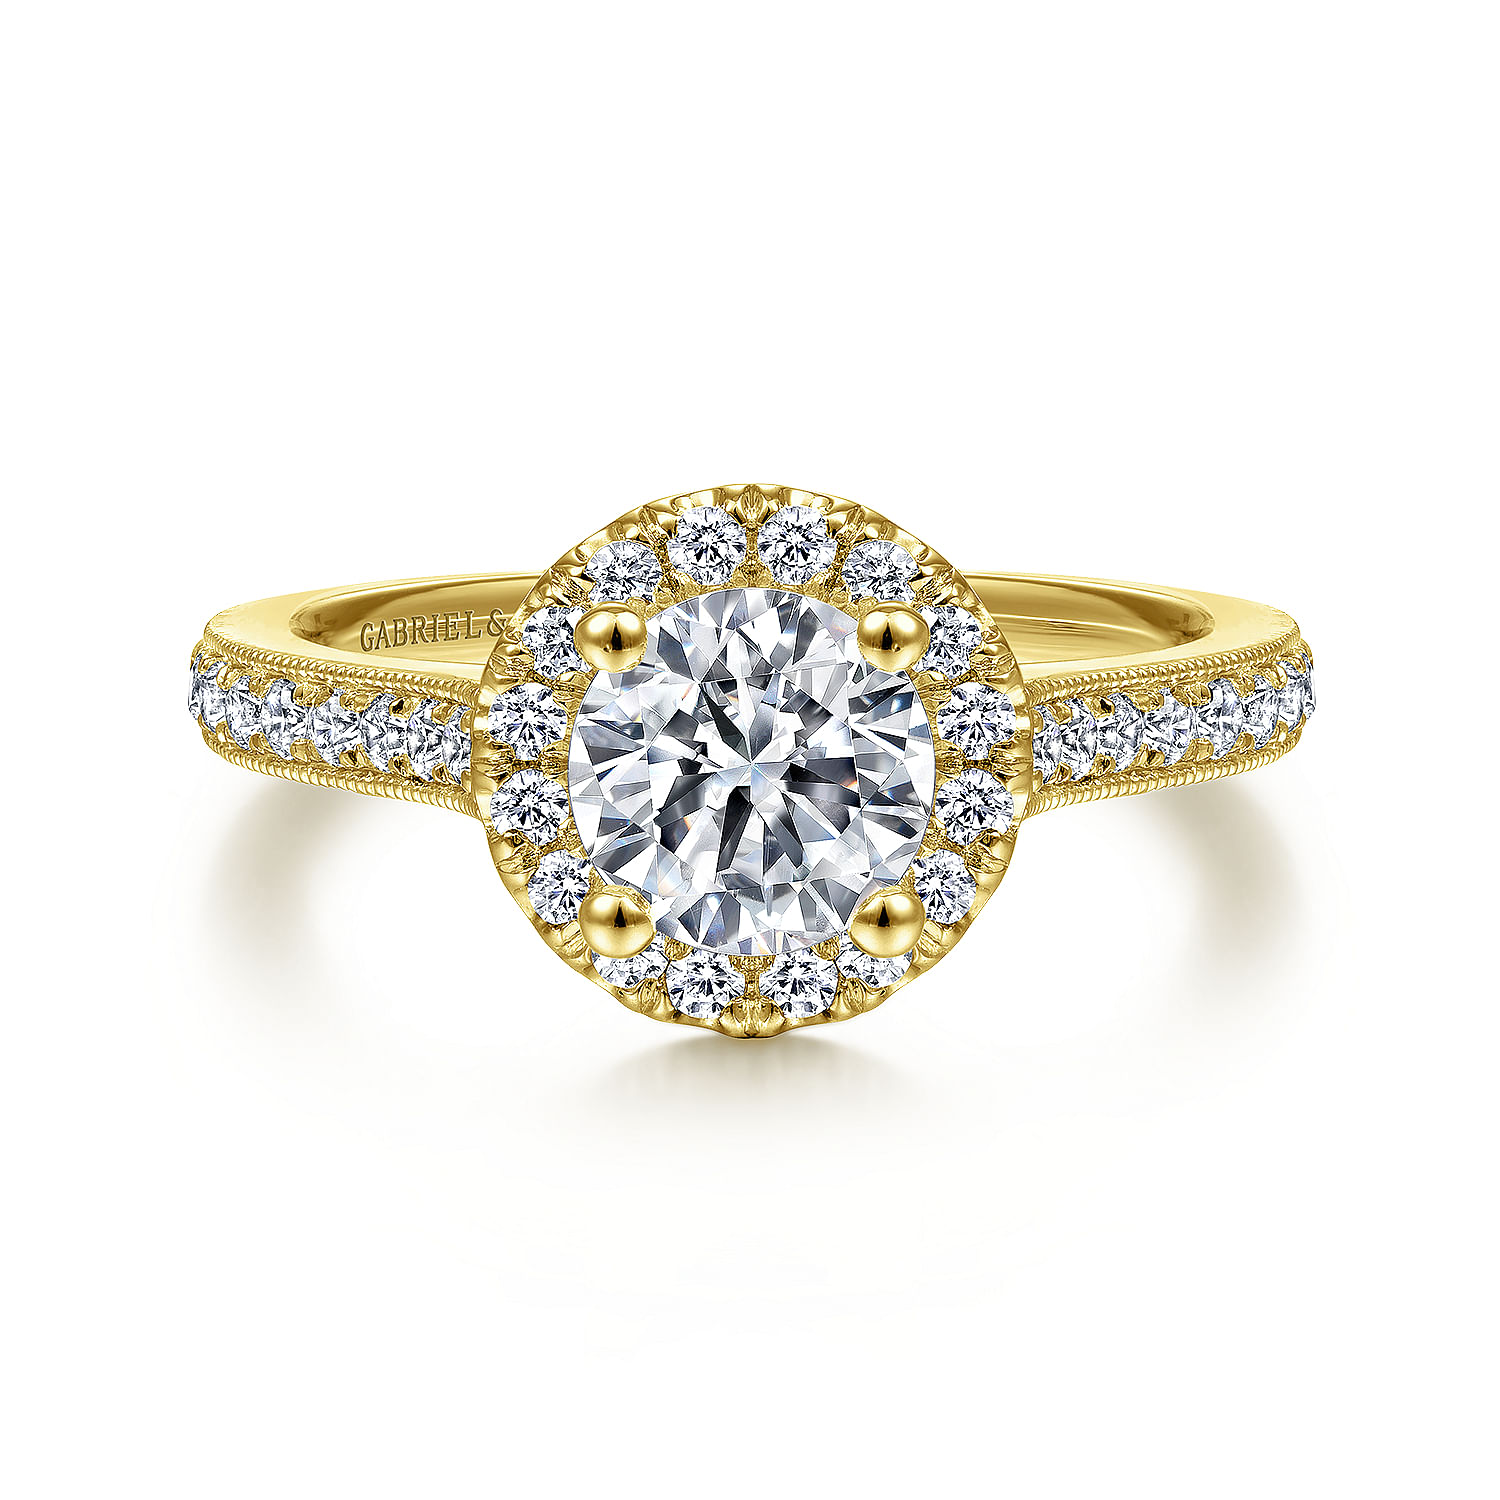 Bernadette - Vintage Inspired 14K Yellow Gold Round Halo Diamond Engagement Ring